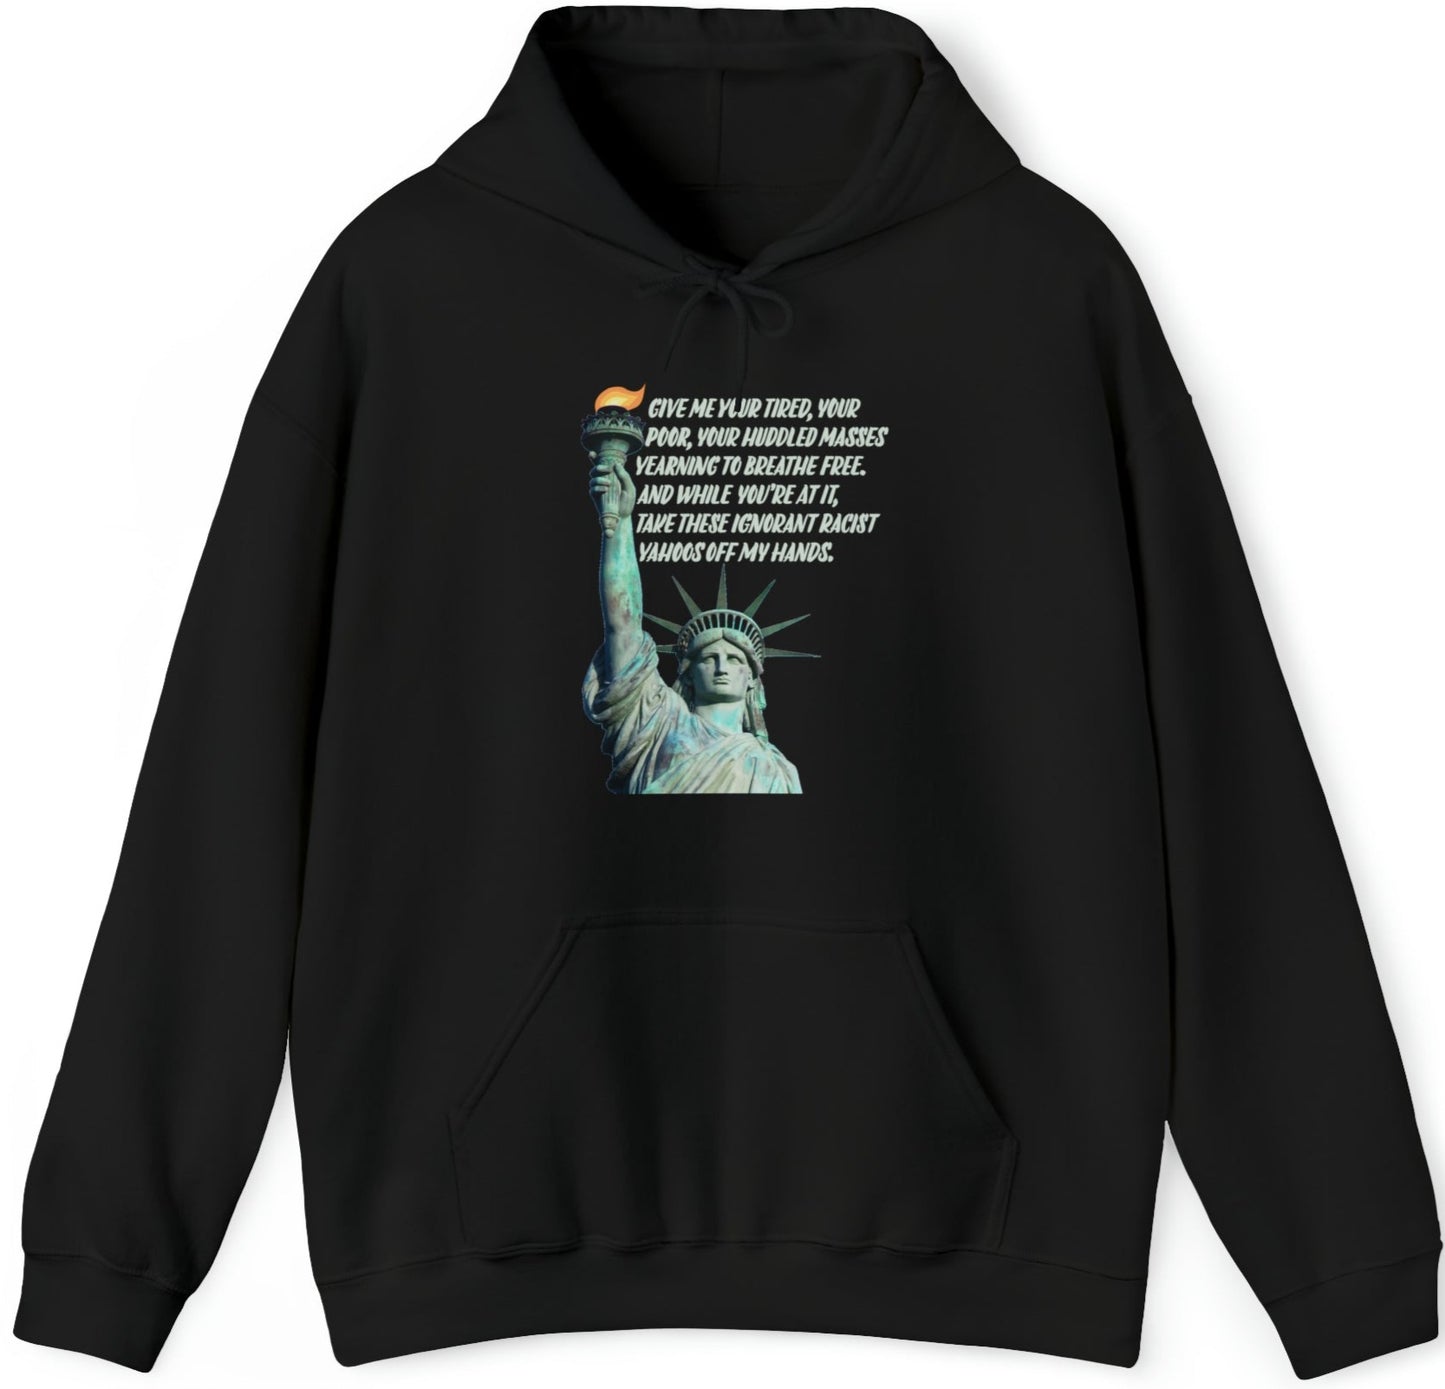 Statue of Liberty hoodie